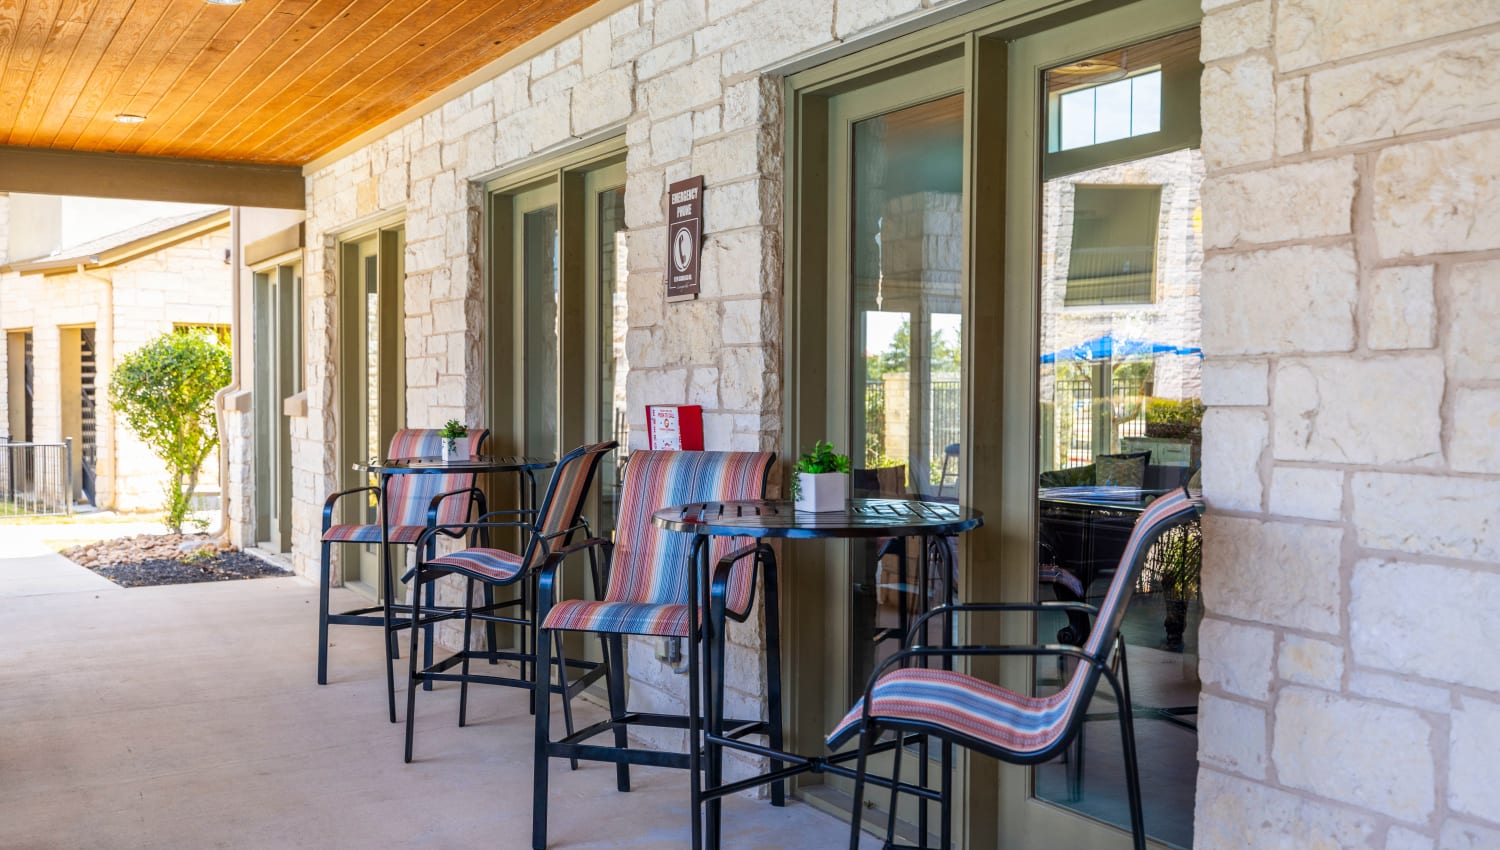 Outdoor sitting area at Carrington Oaks in Buda, Texas